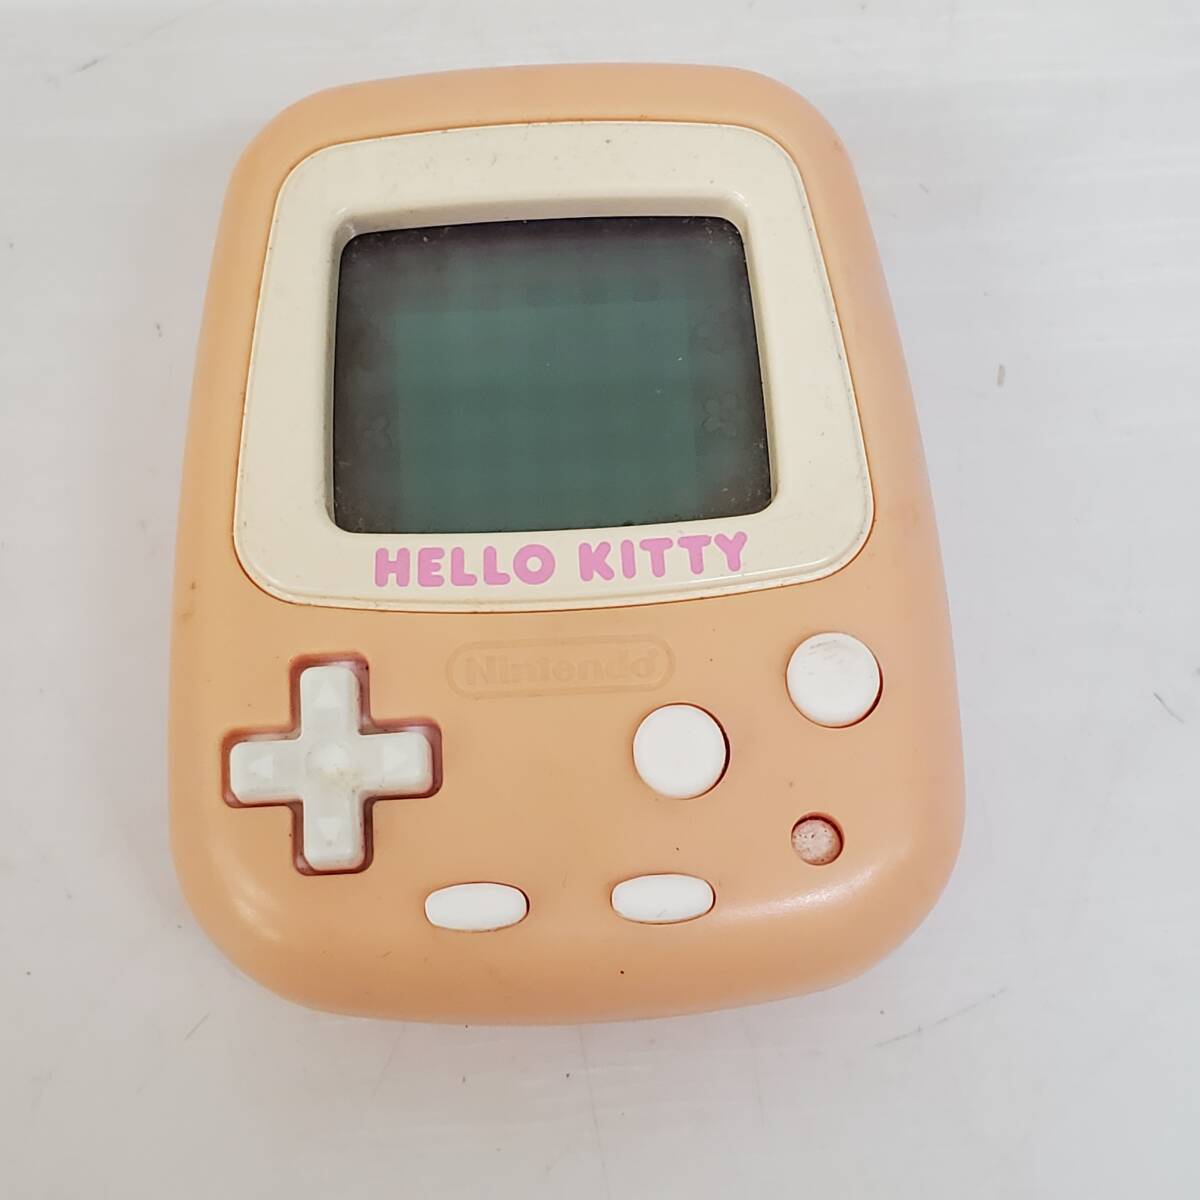 0420-209* that time thing nintendo pocket Hello Kitty MPG-001 retro immovable goods HelloKitty Kitty Junk NINTENDO